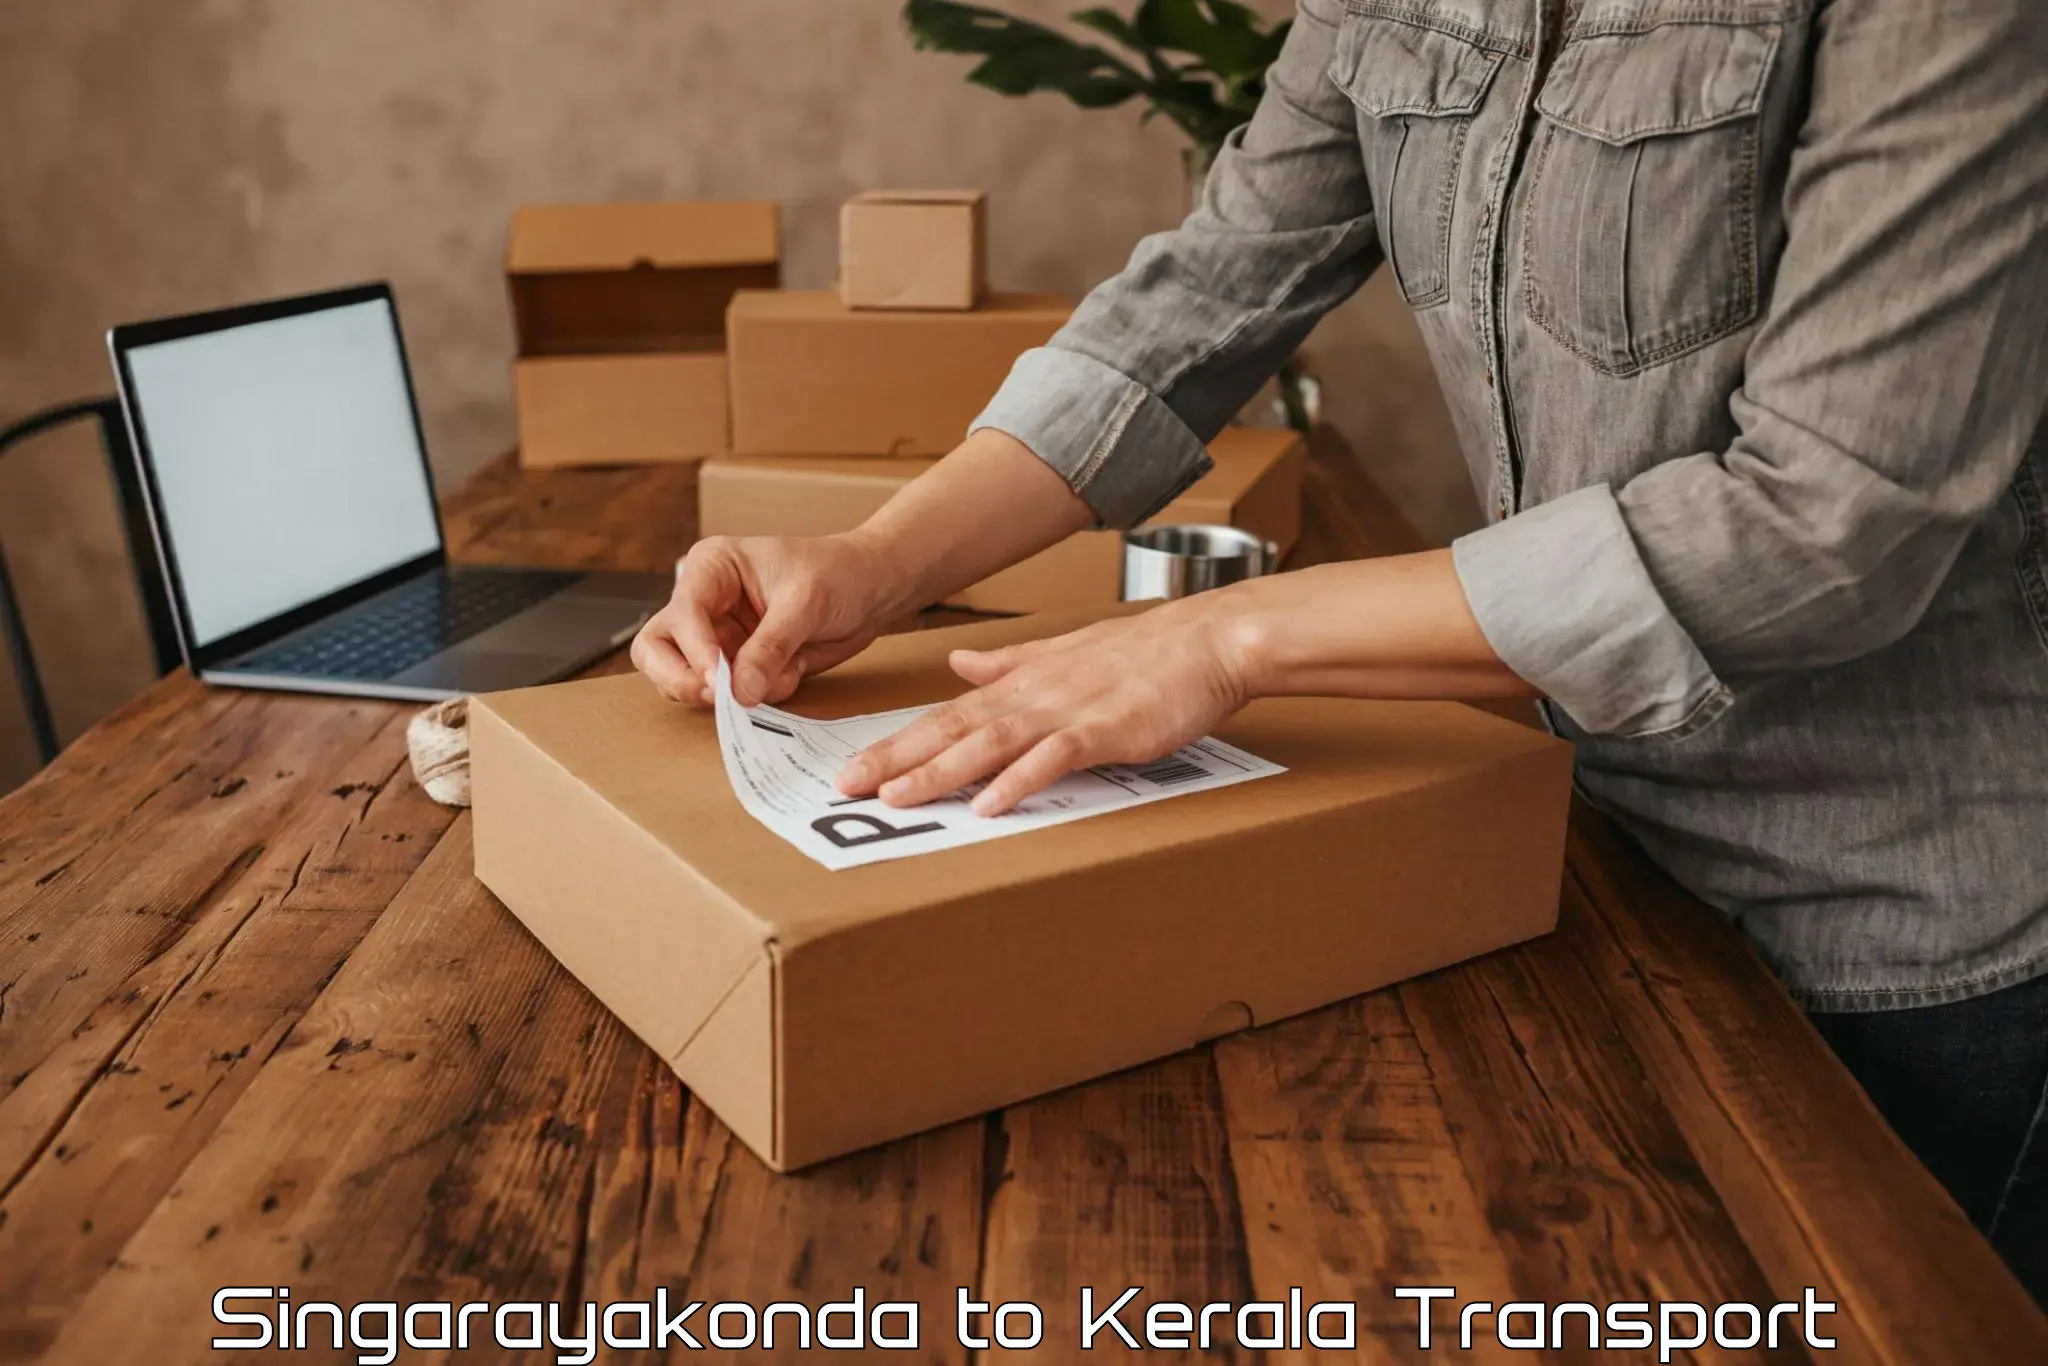 Road transport online services Singarayakonda to Kuttikol